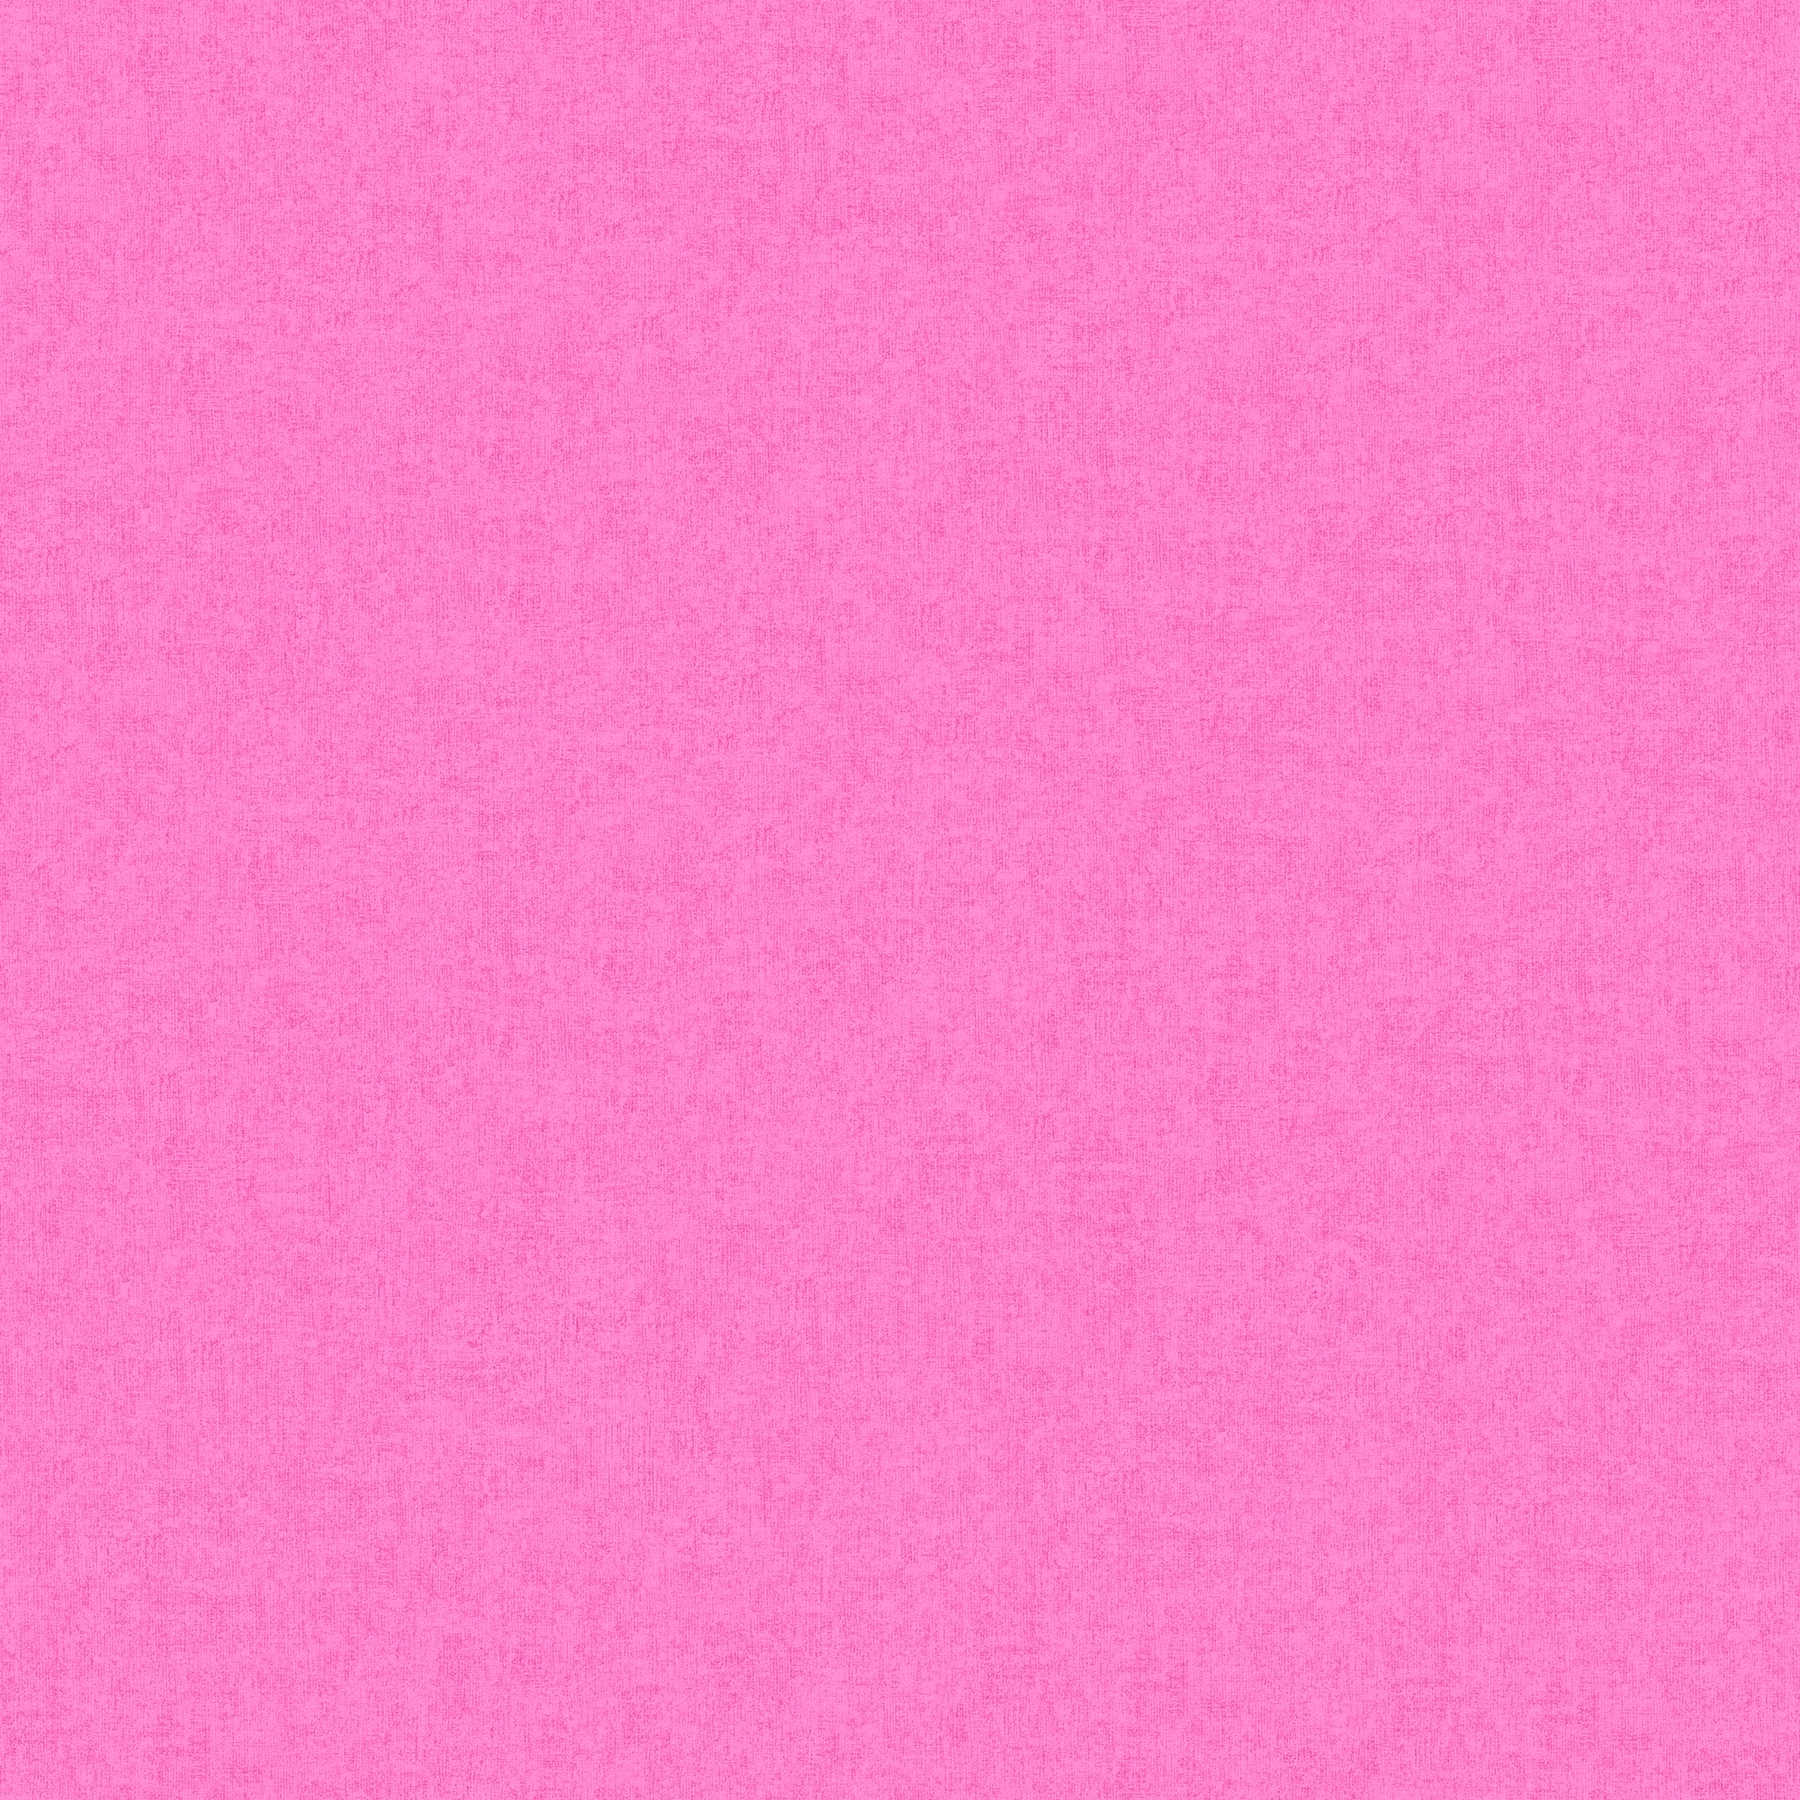 Nursery wallpaper pink for girls, monochrome
